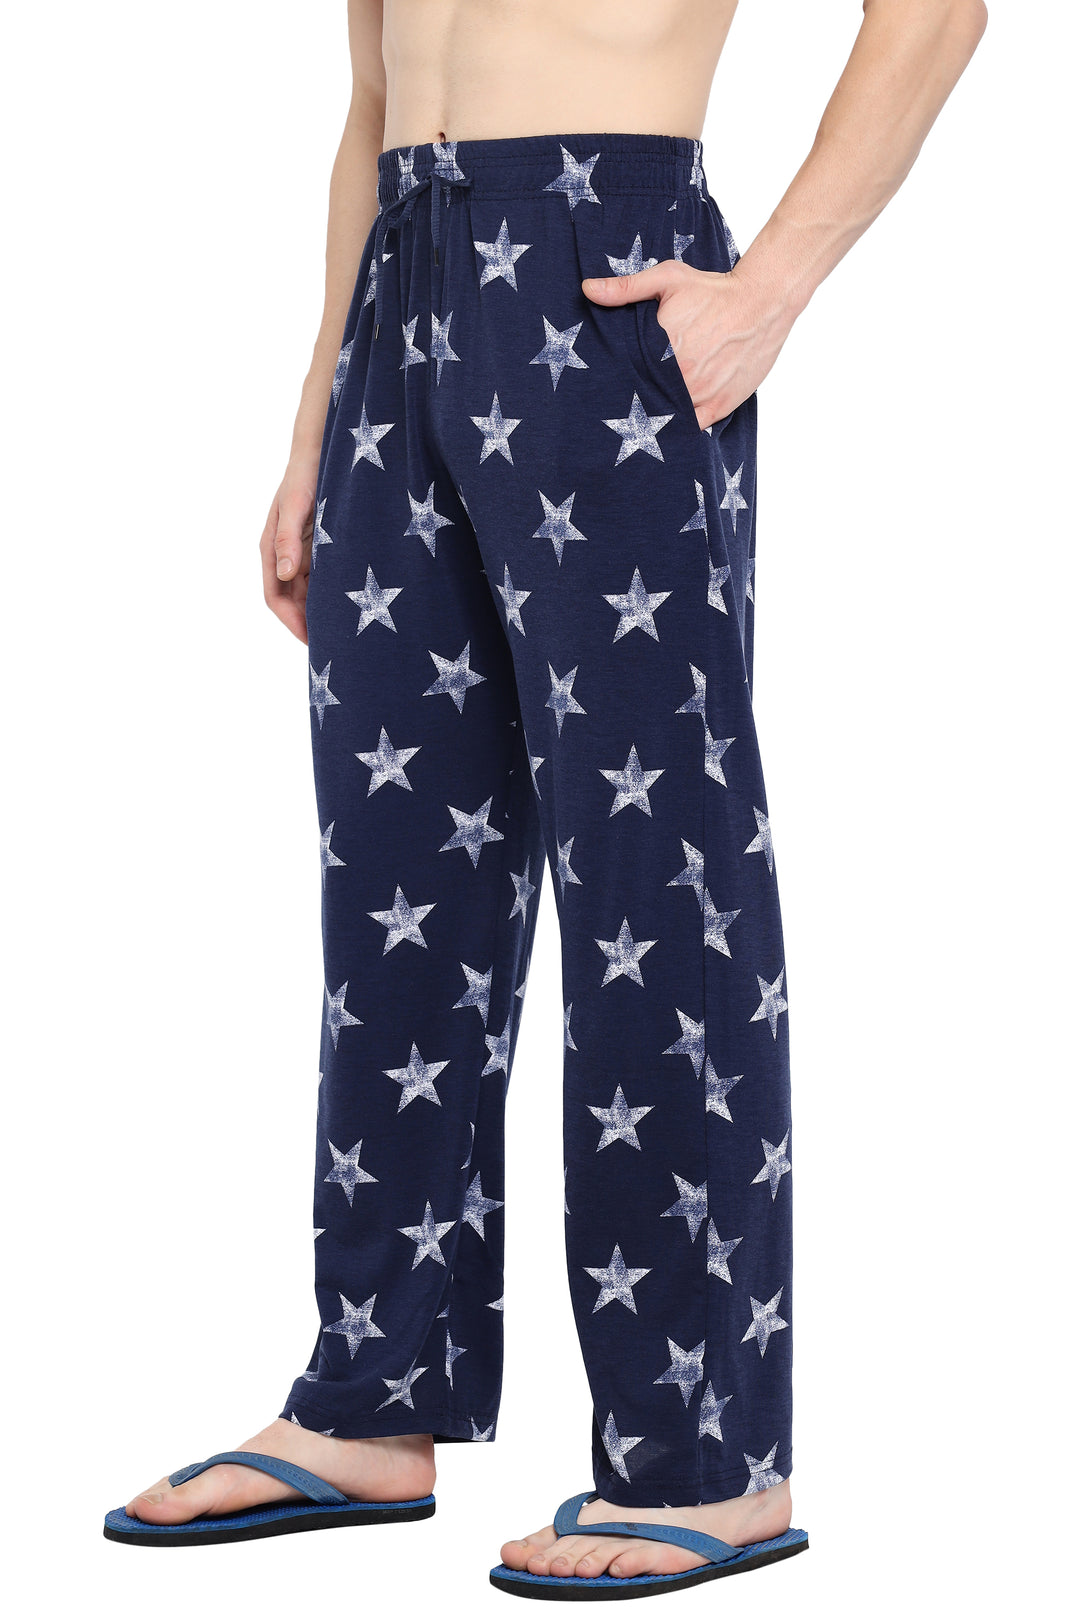 Blue Color Star Printed Pyjama